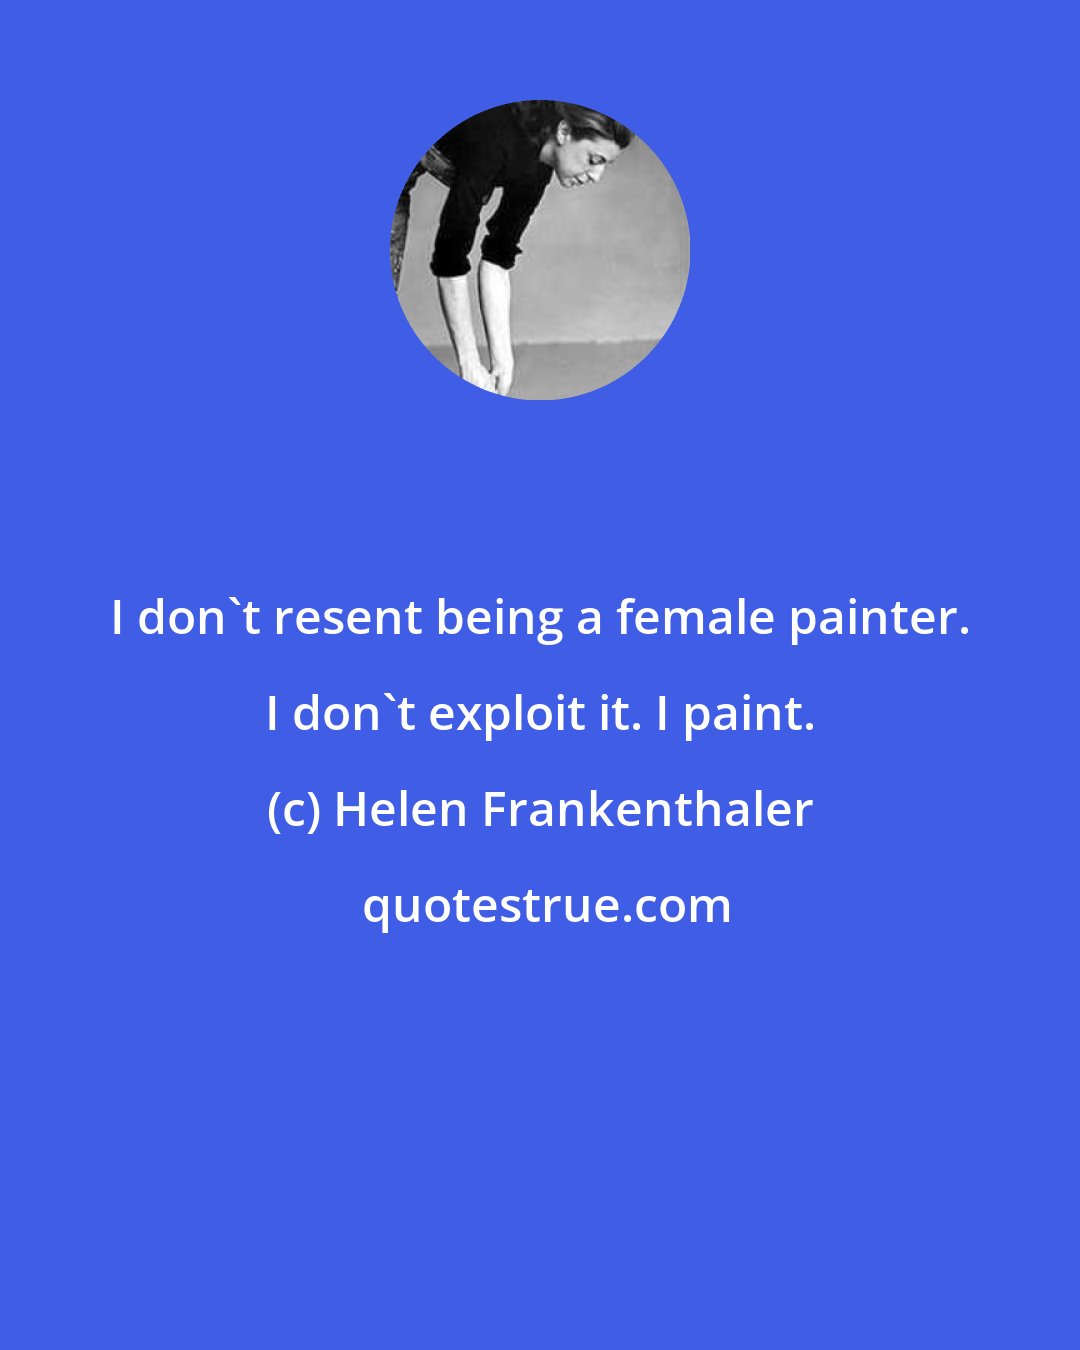 Helen Frankenthaler: I don't resent being a female painter. I don't exploit it. I paint.